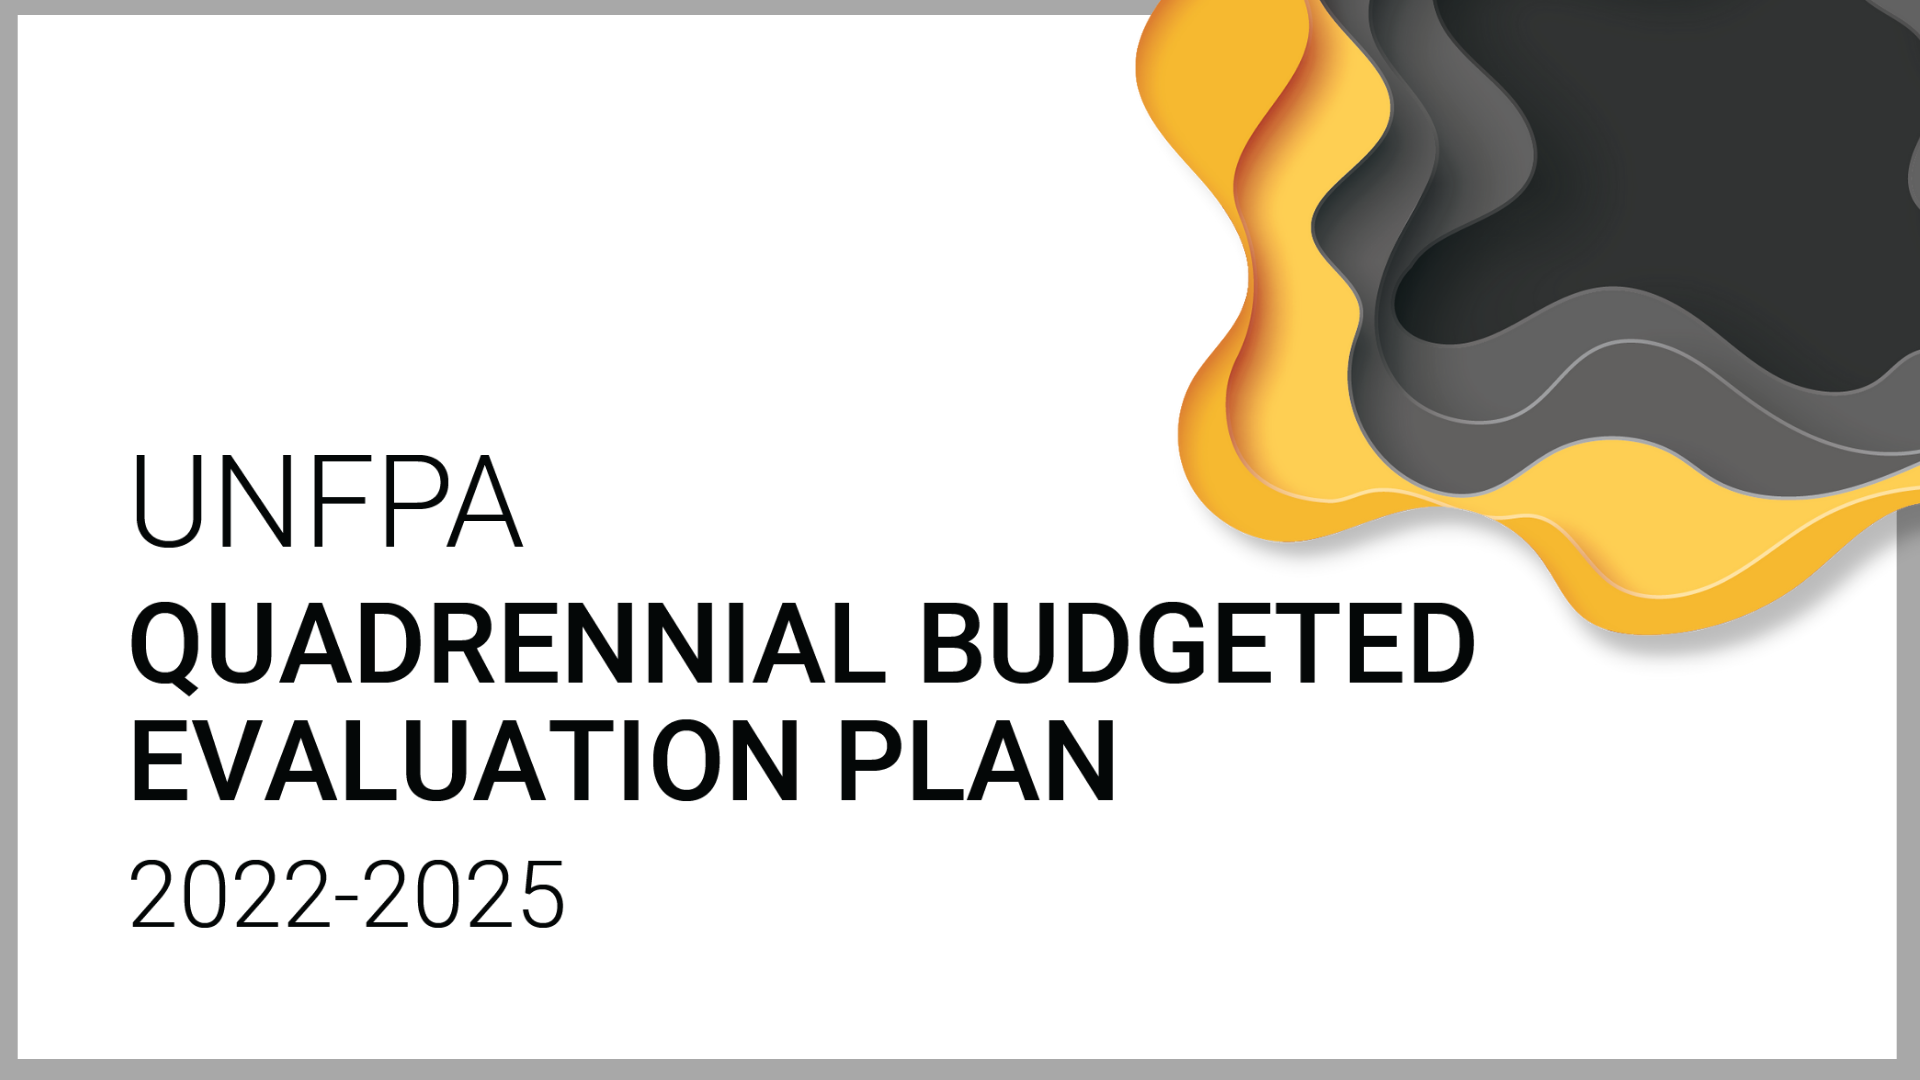 UNFPA quadrennial budgeted evaluation plan, 2022-2025